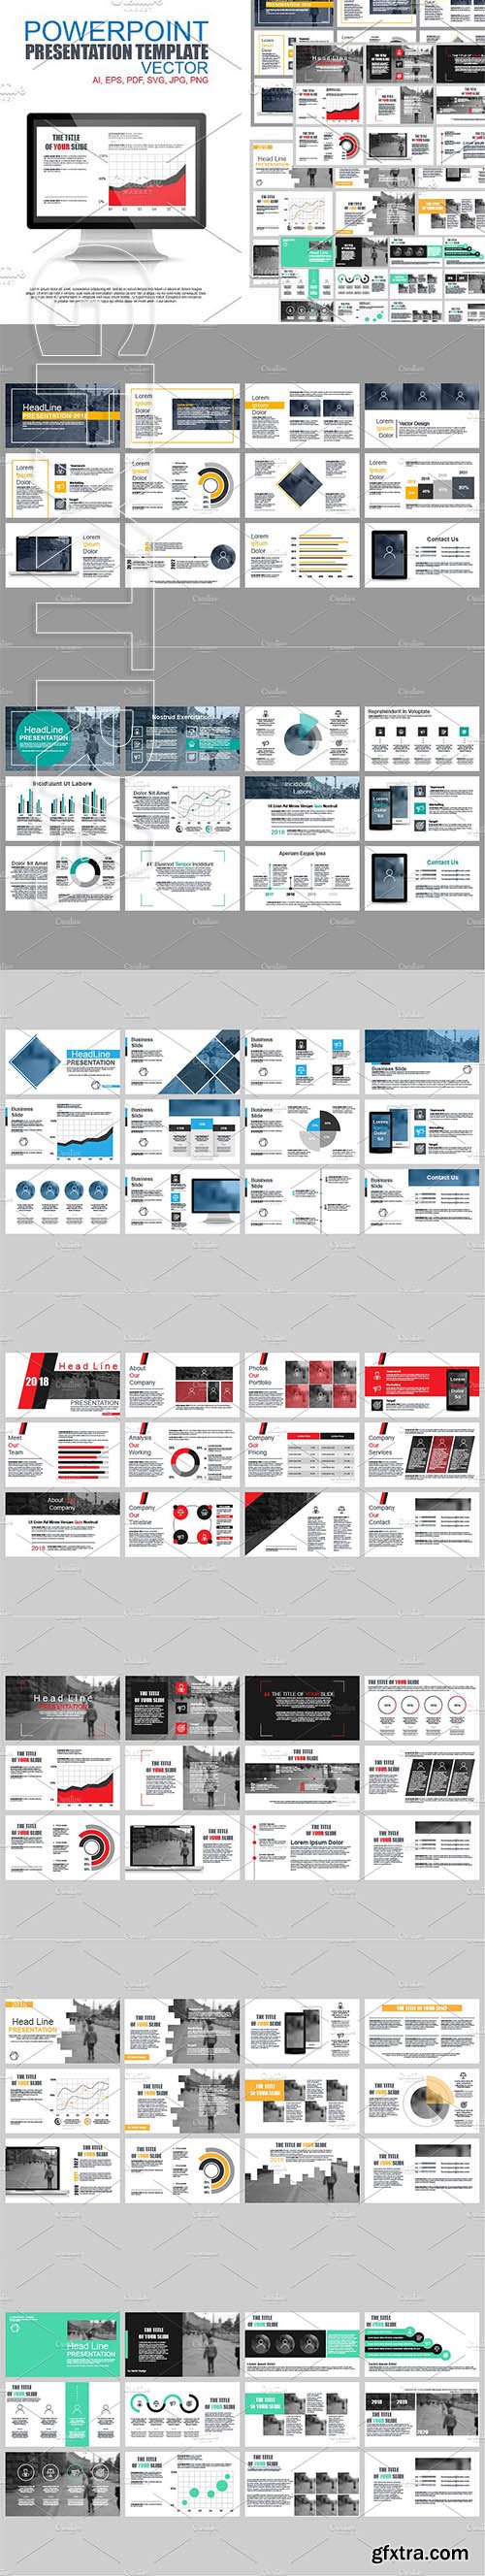 CreativeMarket - Powerpoint Presentation Templates 2197363